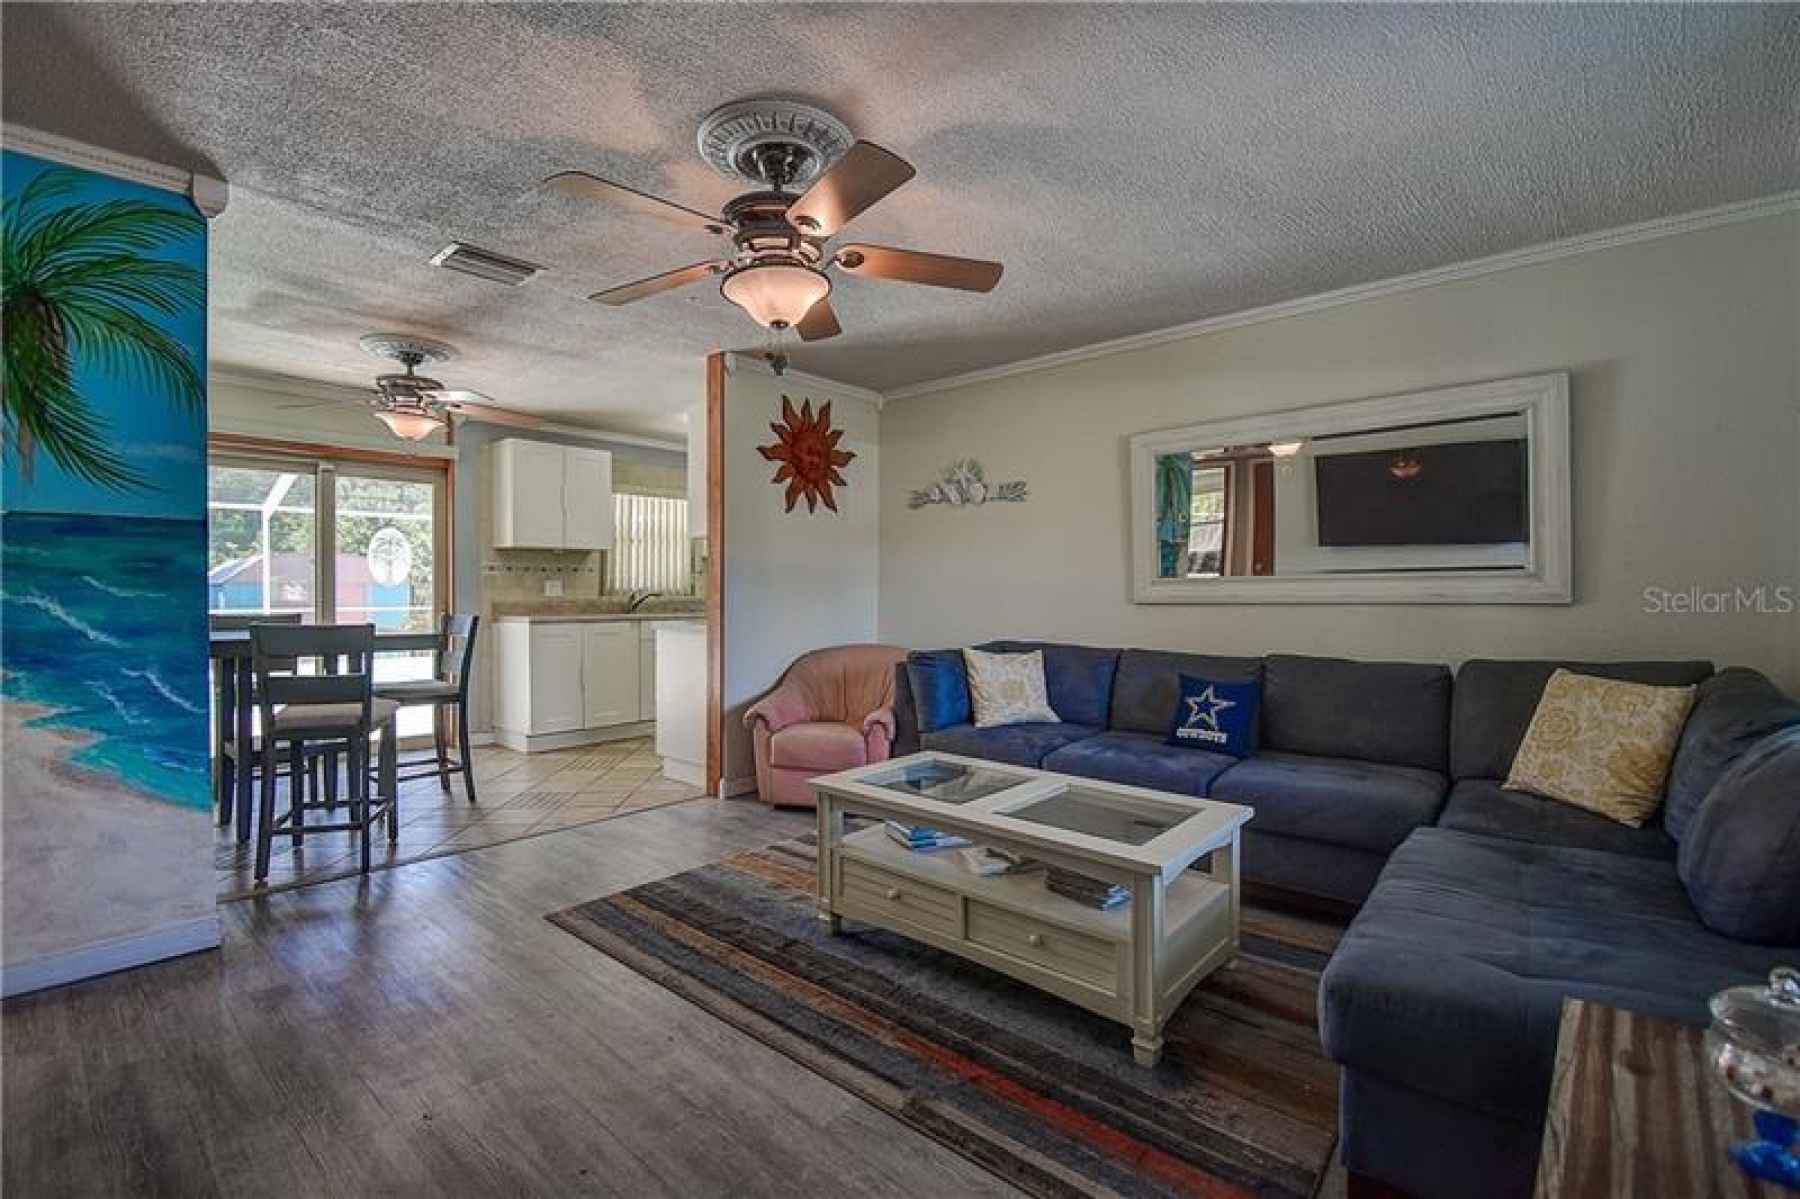 Living room with vinyl plank floors